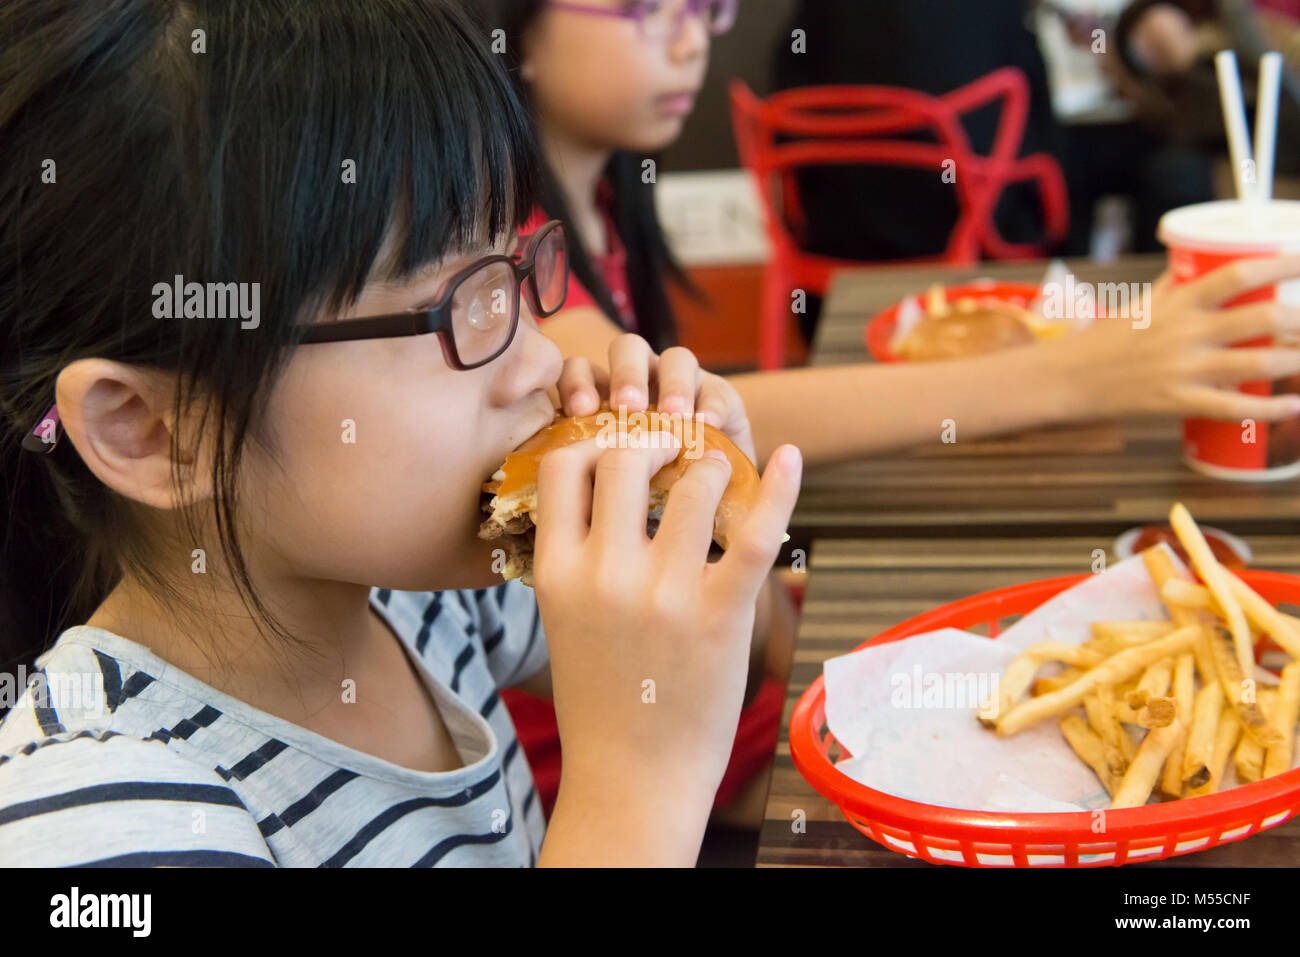 Asian kid eating a hamburger and french fries Stock Photo